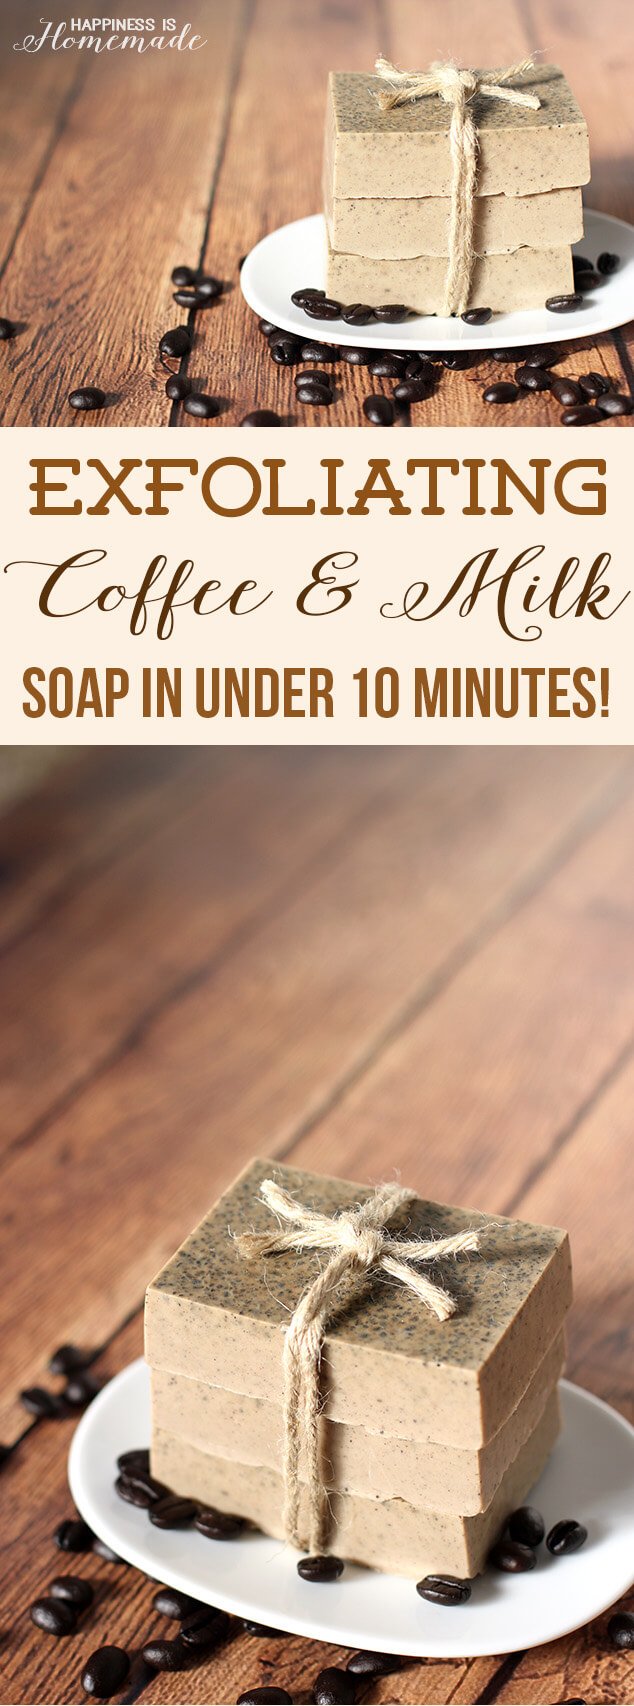 Easy DIY Exfoliating Coffee & Milk Soap in Under 10 Minutes